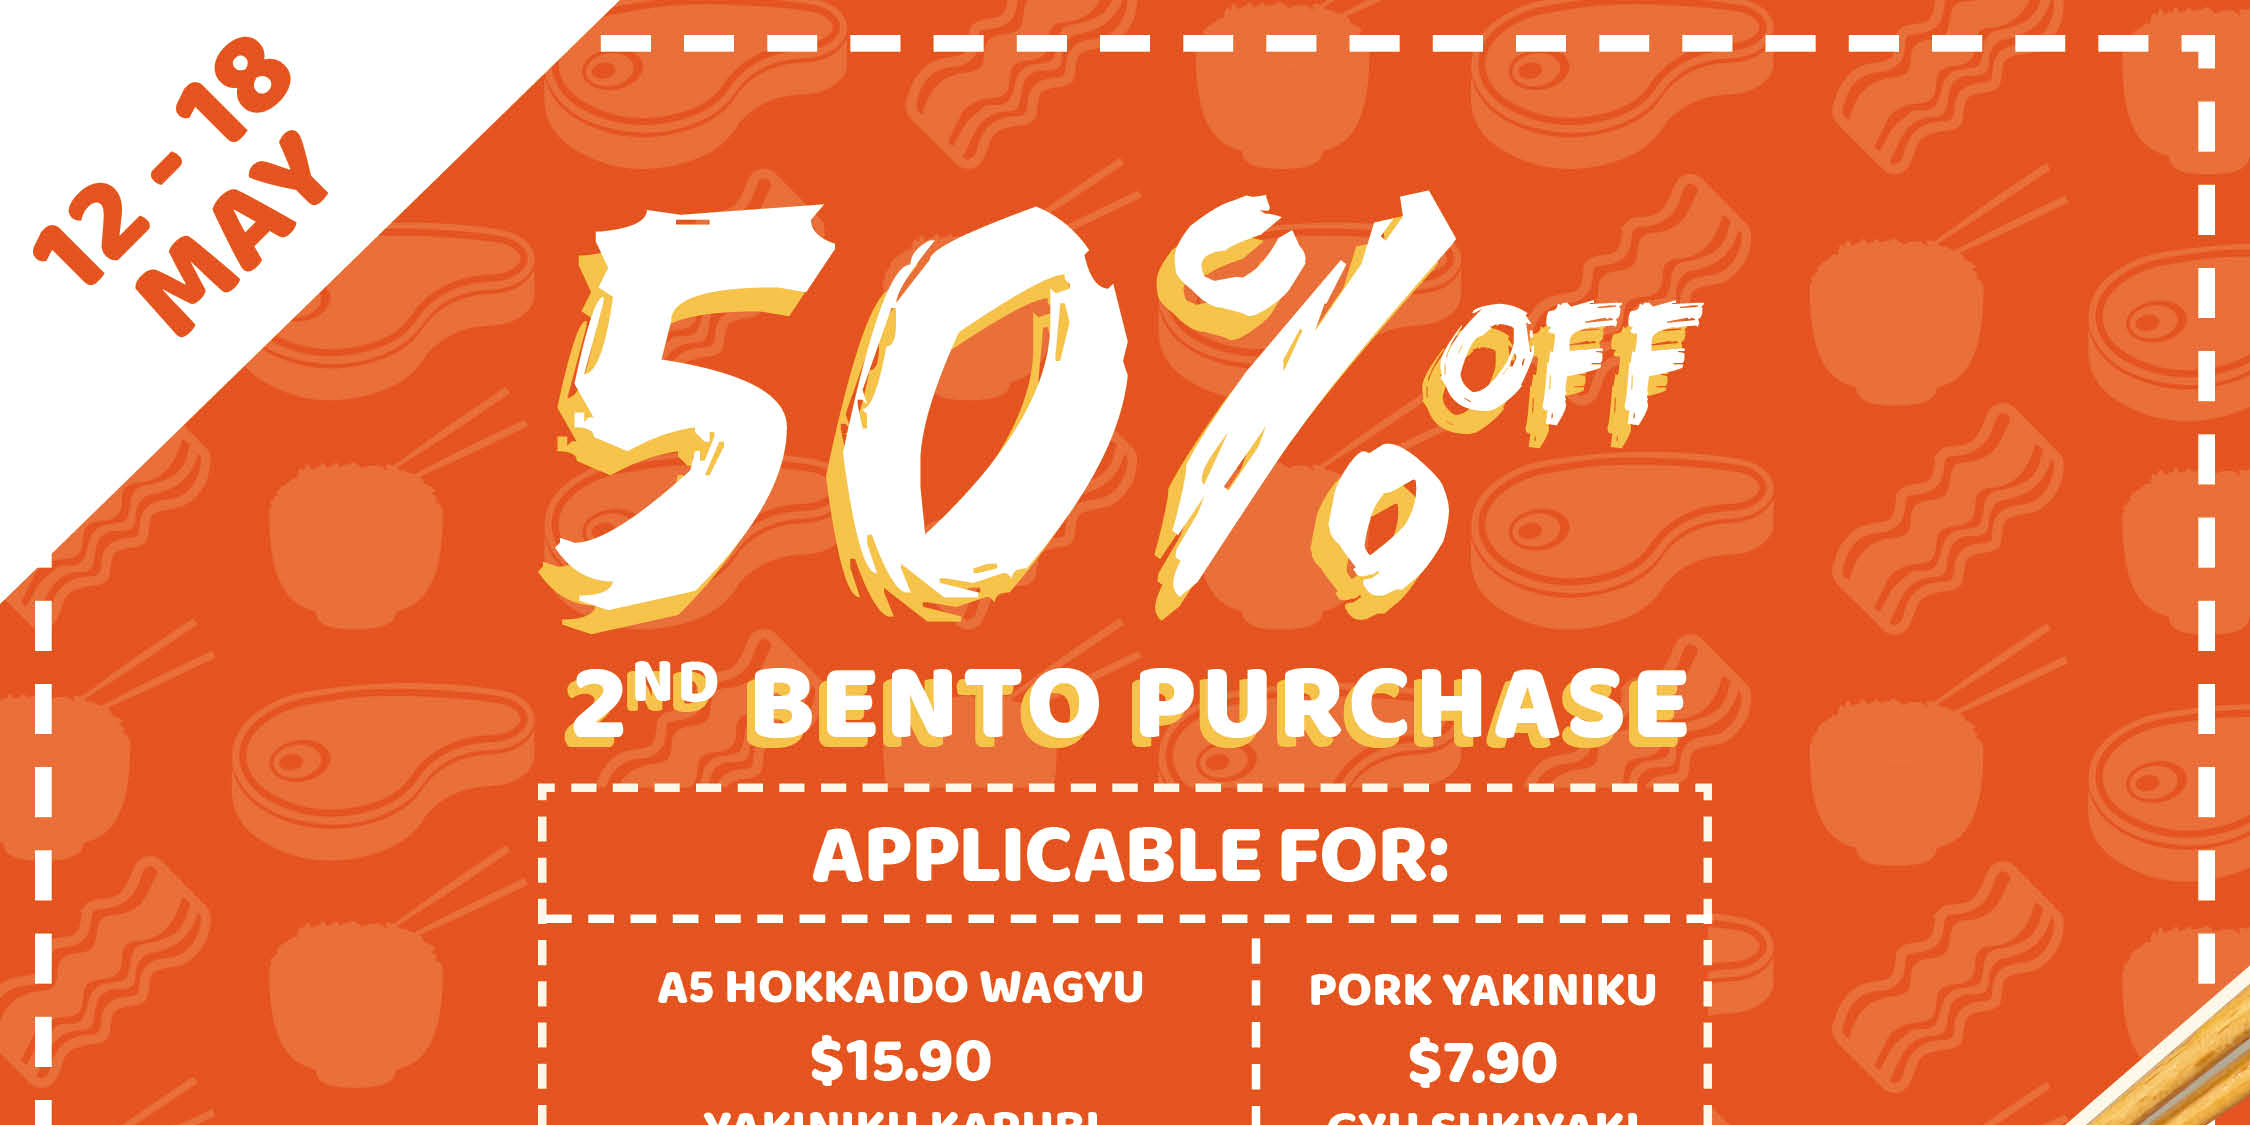 50% Off 2nd Bento Purchase at #ricesando tokyo